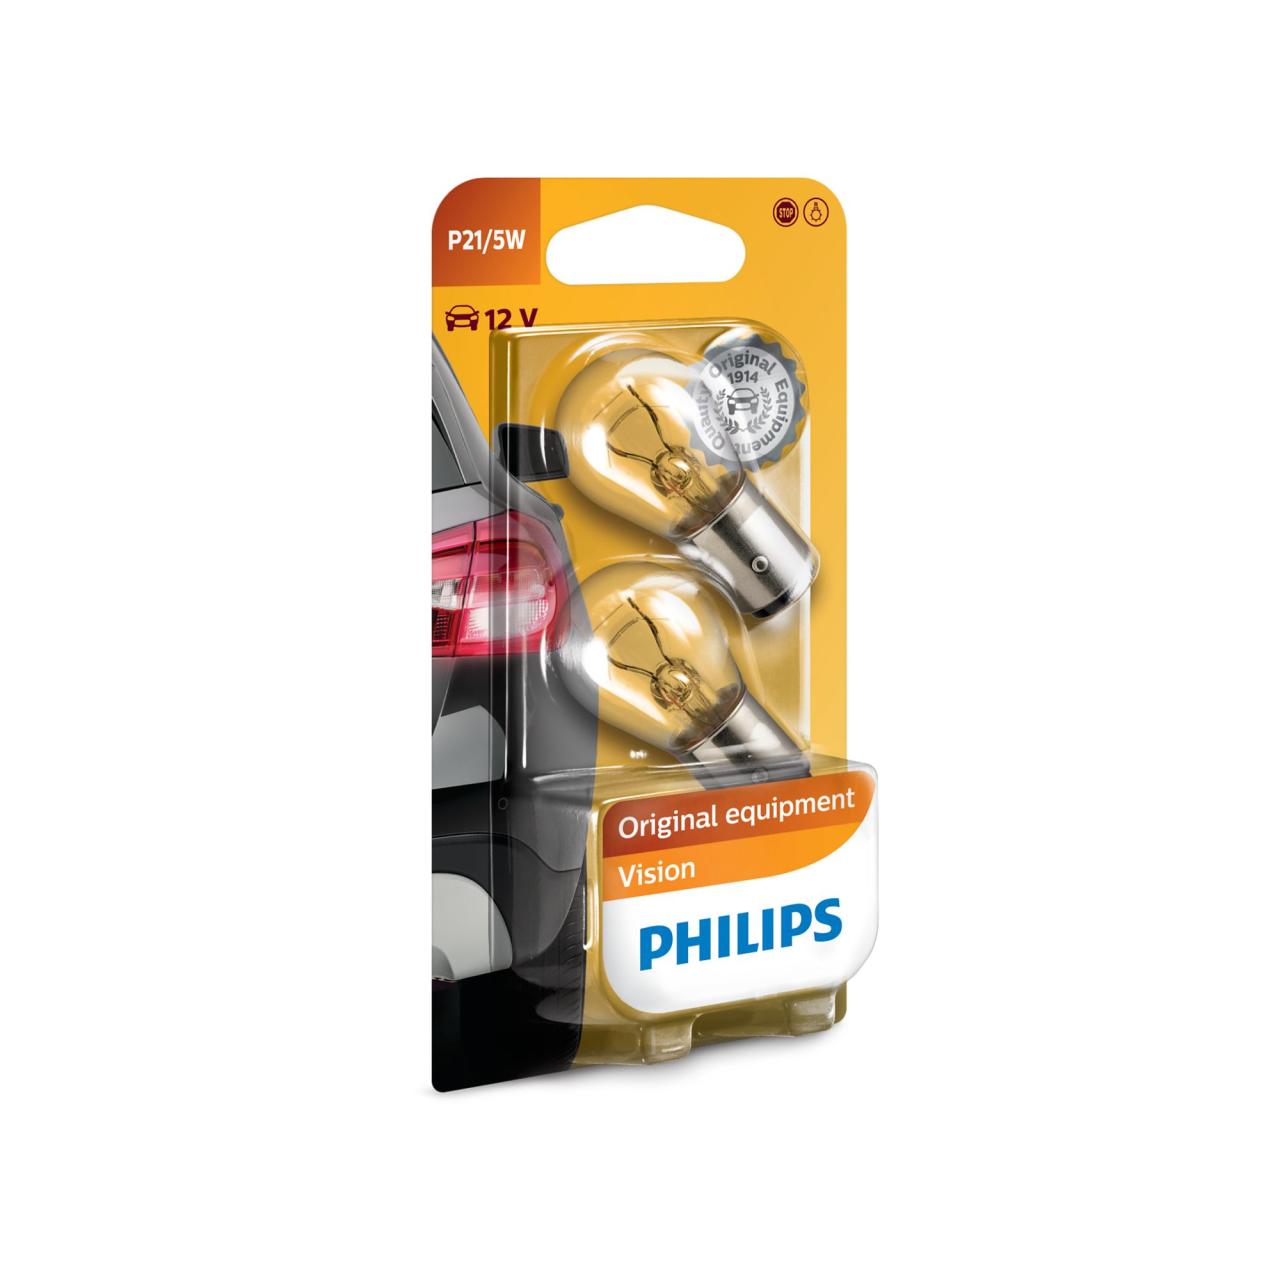 PHILIPS Vision Kugellampe P21/5W